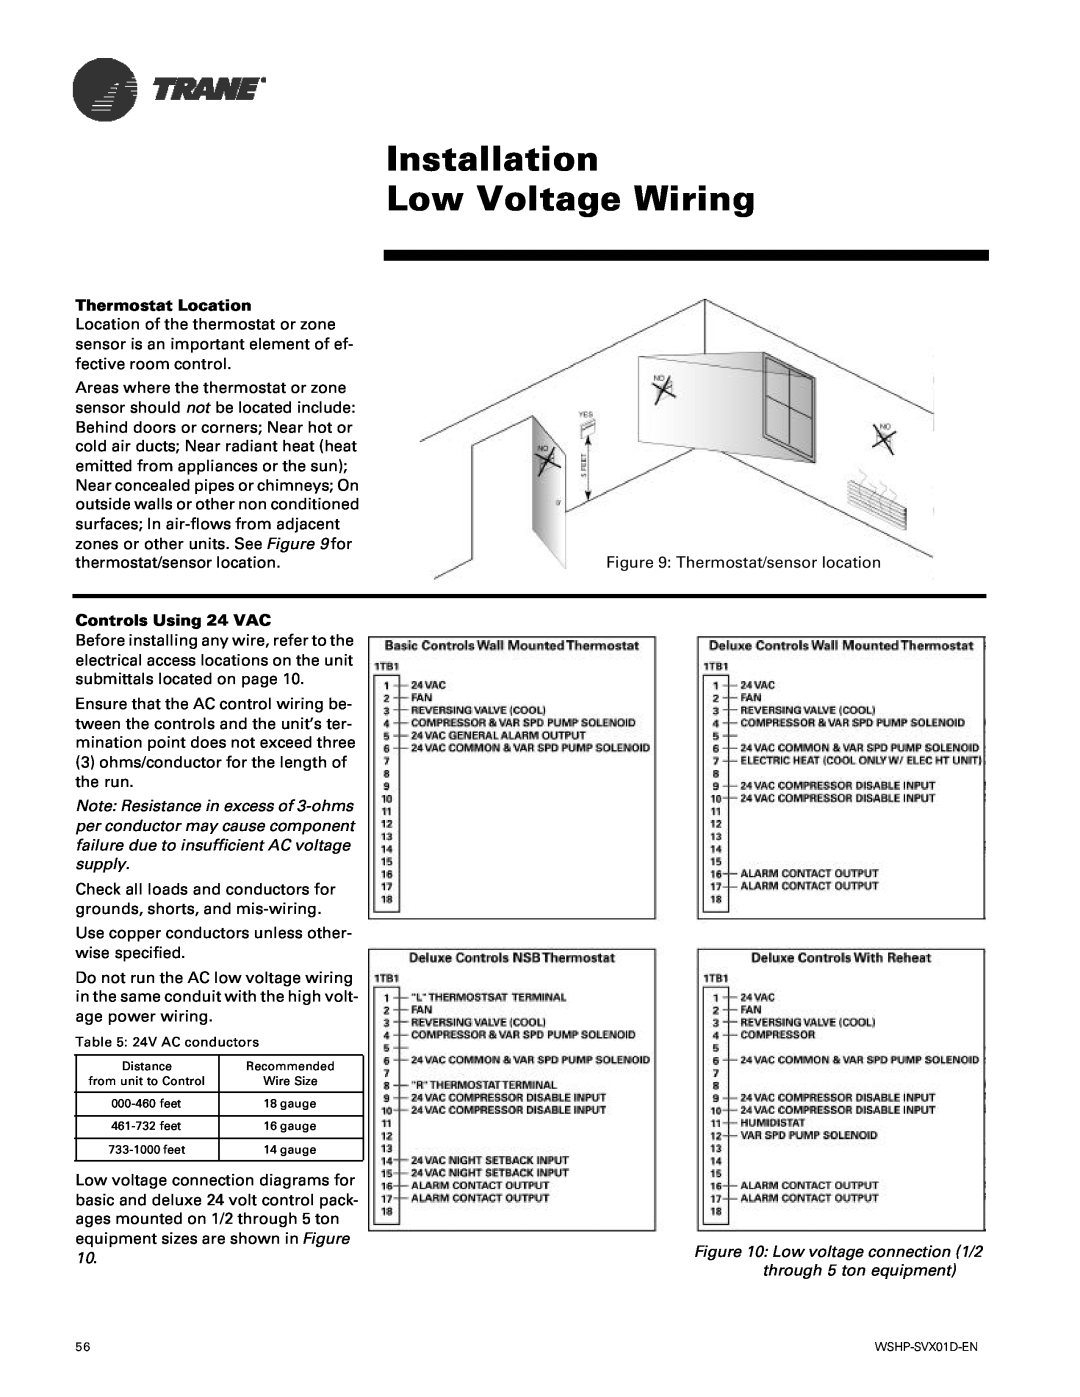 Trane GEH, GEV manual Installation Low Voltage Wiring, Thermostat Location, Controls Using 24 VAC 